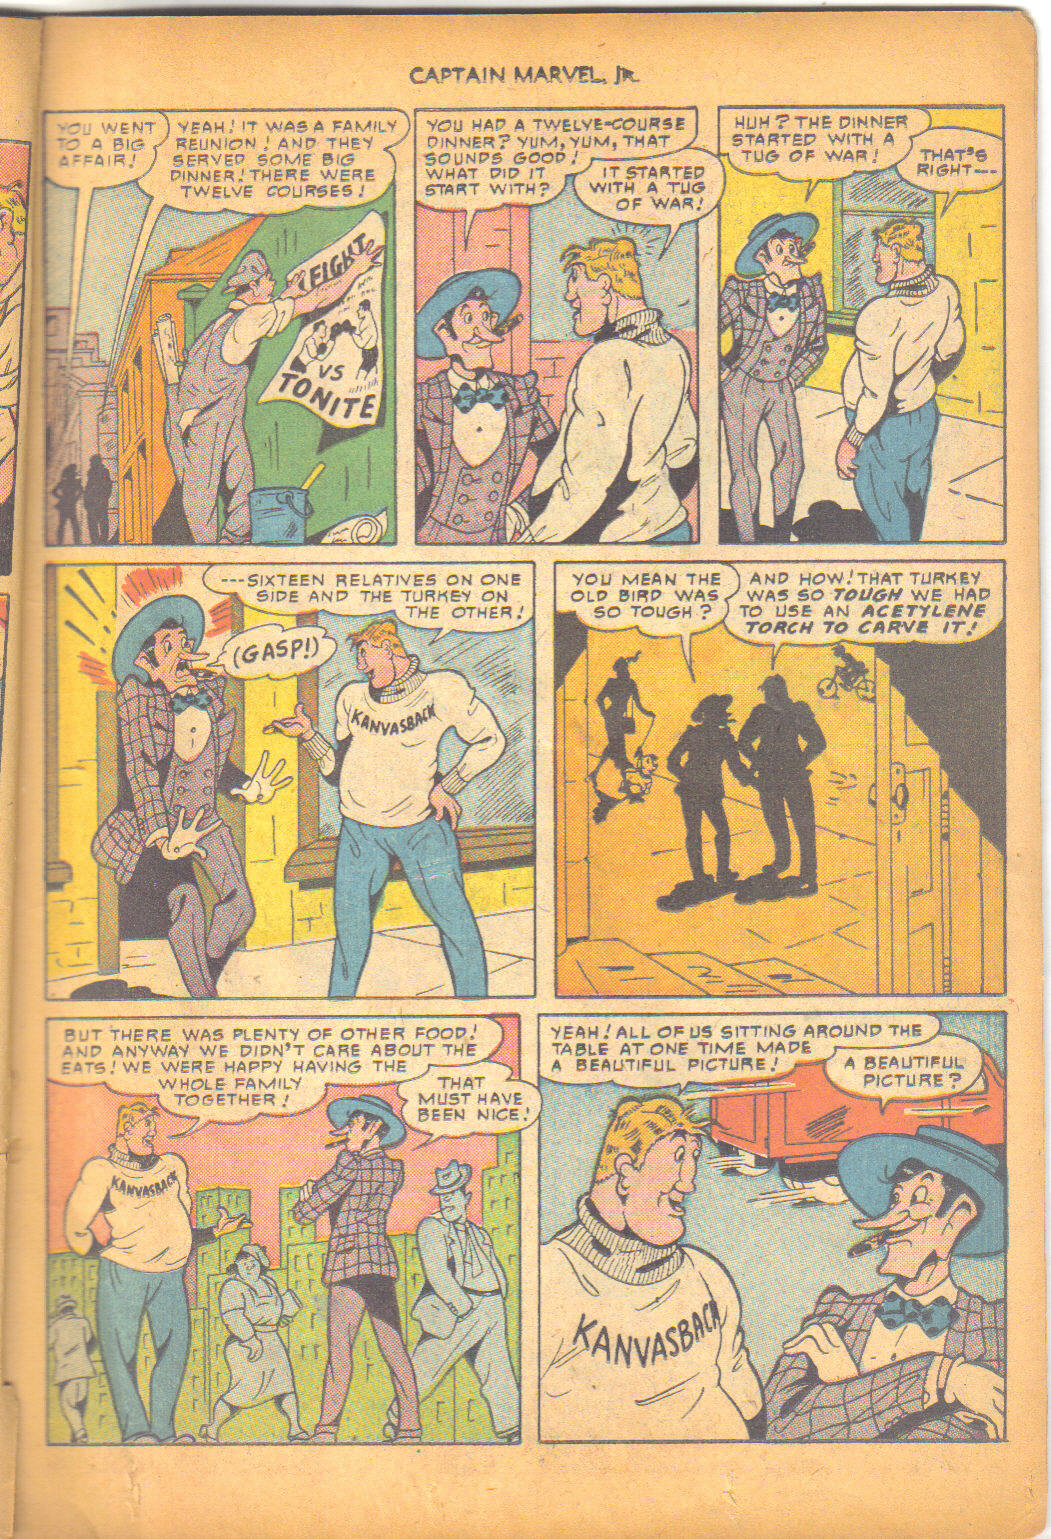 Read online Captain Marvel, Jr. comic -  Issue #95 - 22